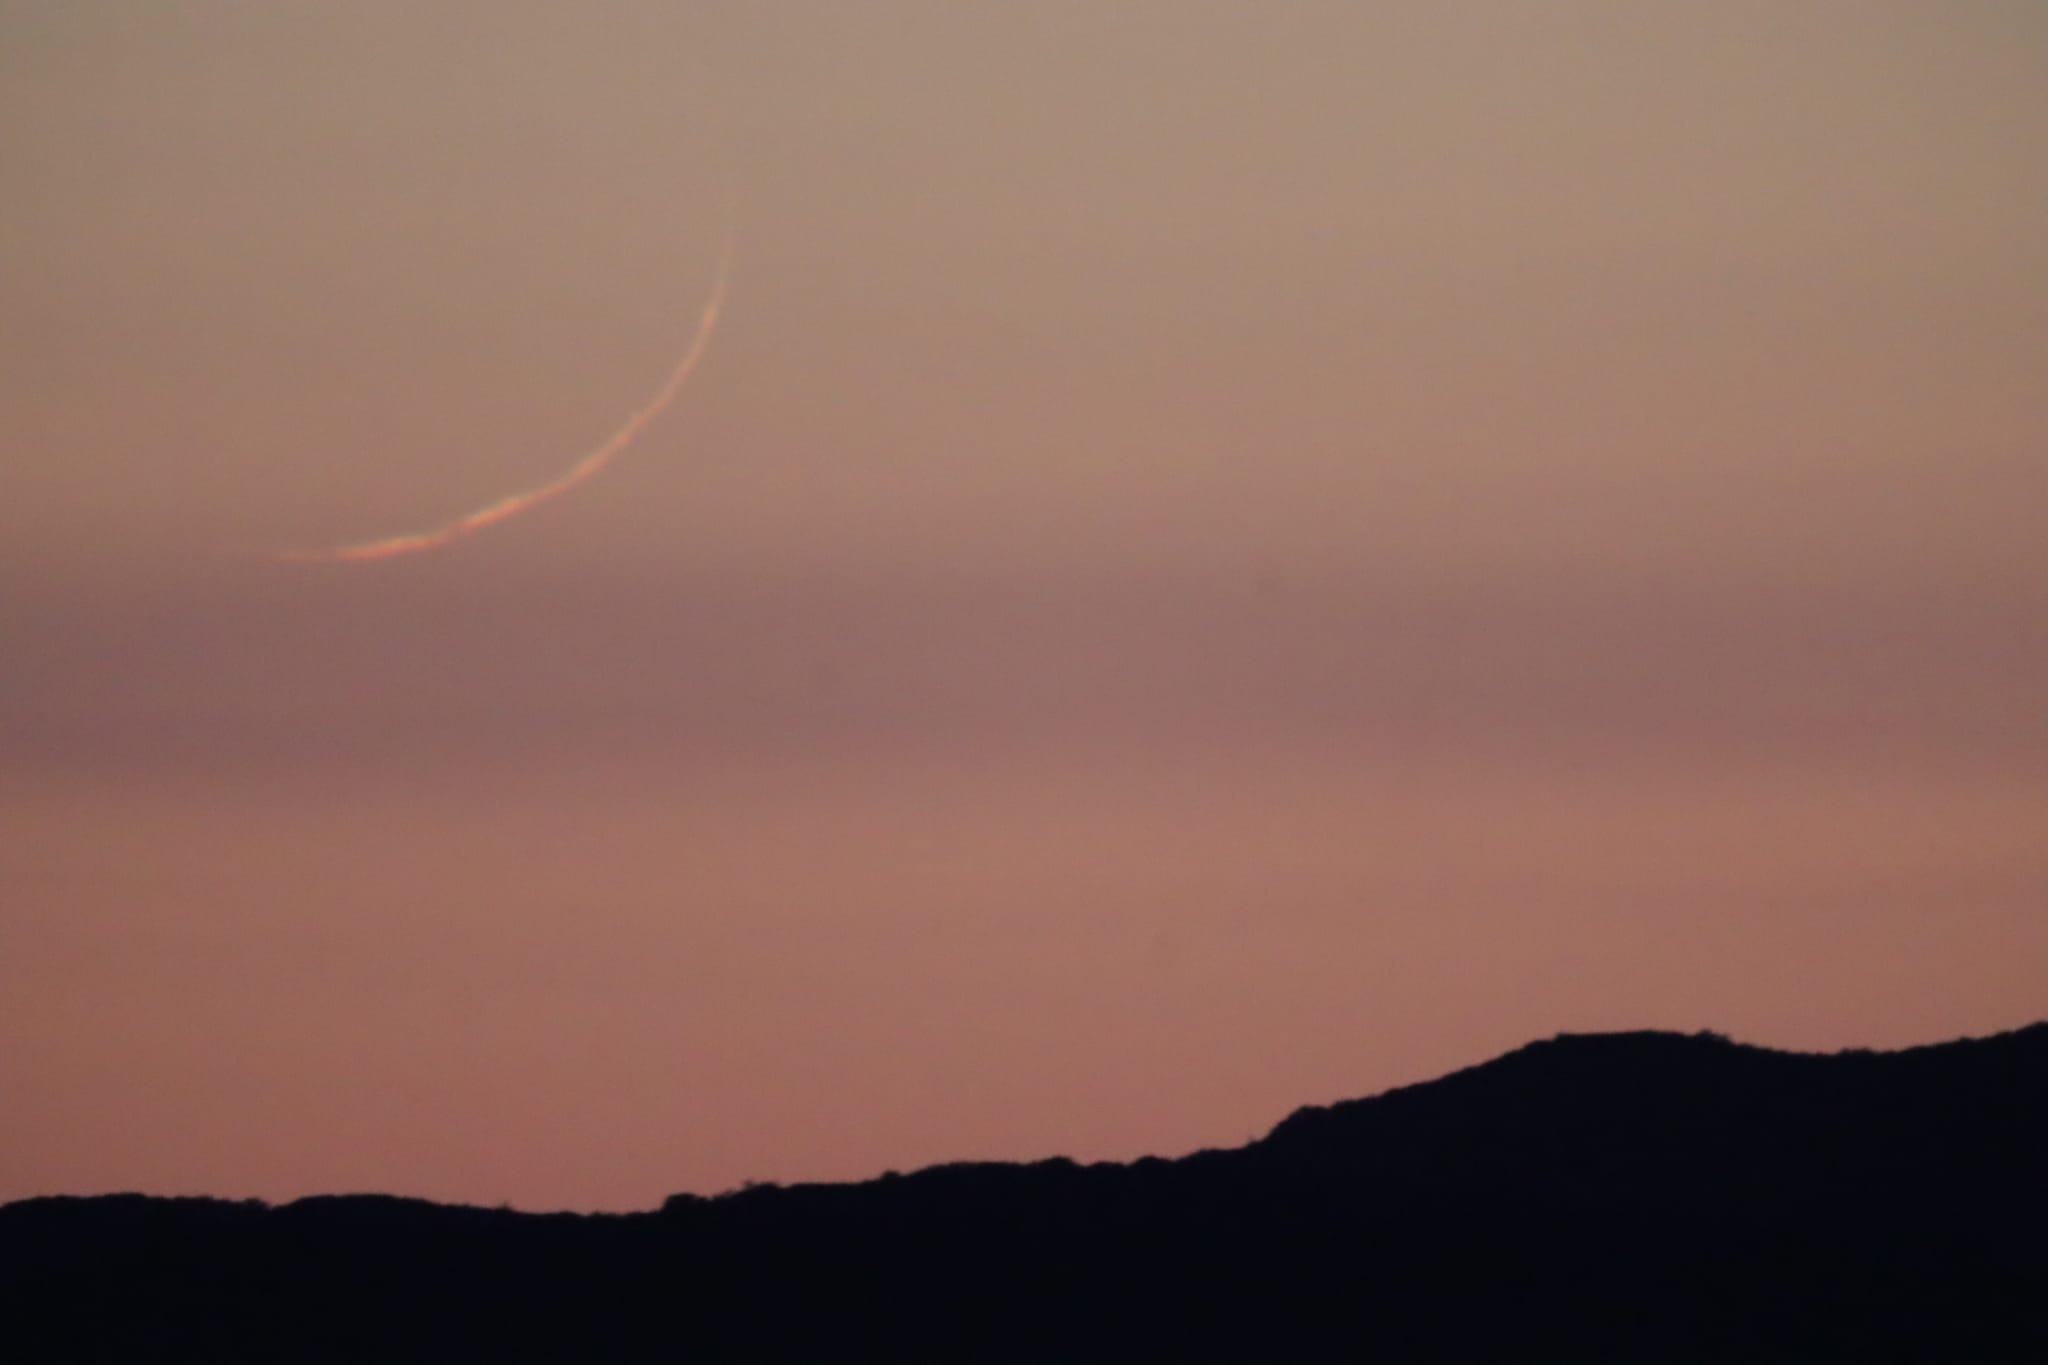 Crescent moon photo of 1 Sha'ban 1444 AH seen from San Diego, California, USA on the evening of Monday, 20 Feb 2023 (MoonHotline).